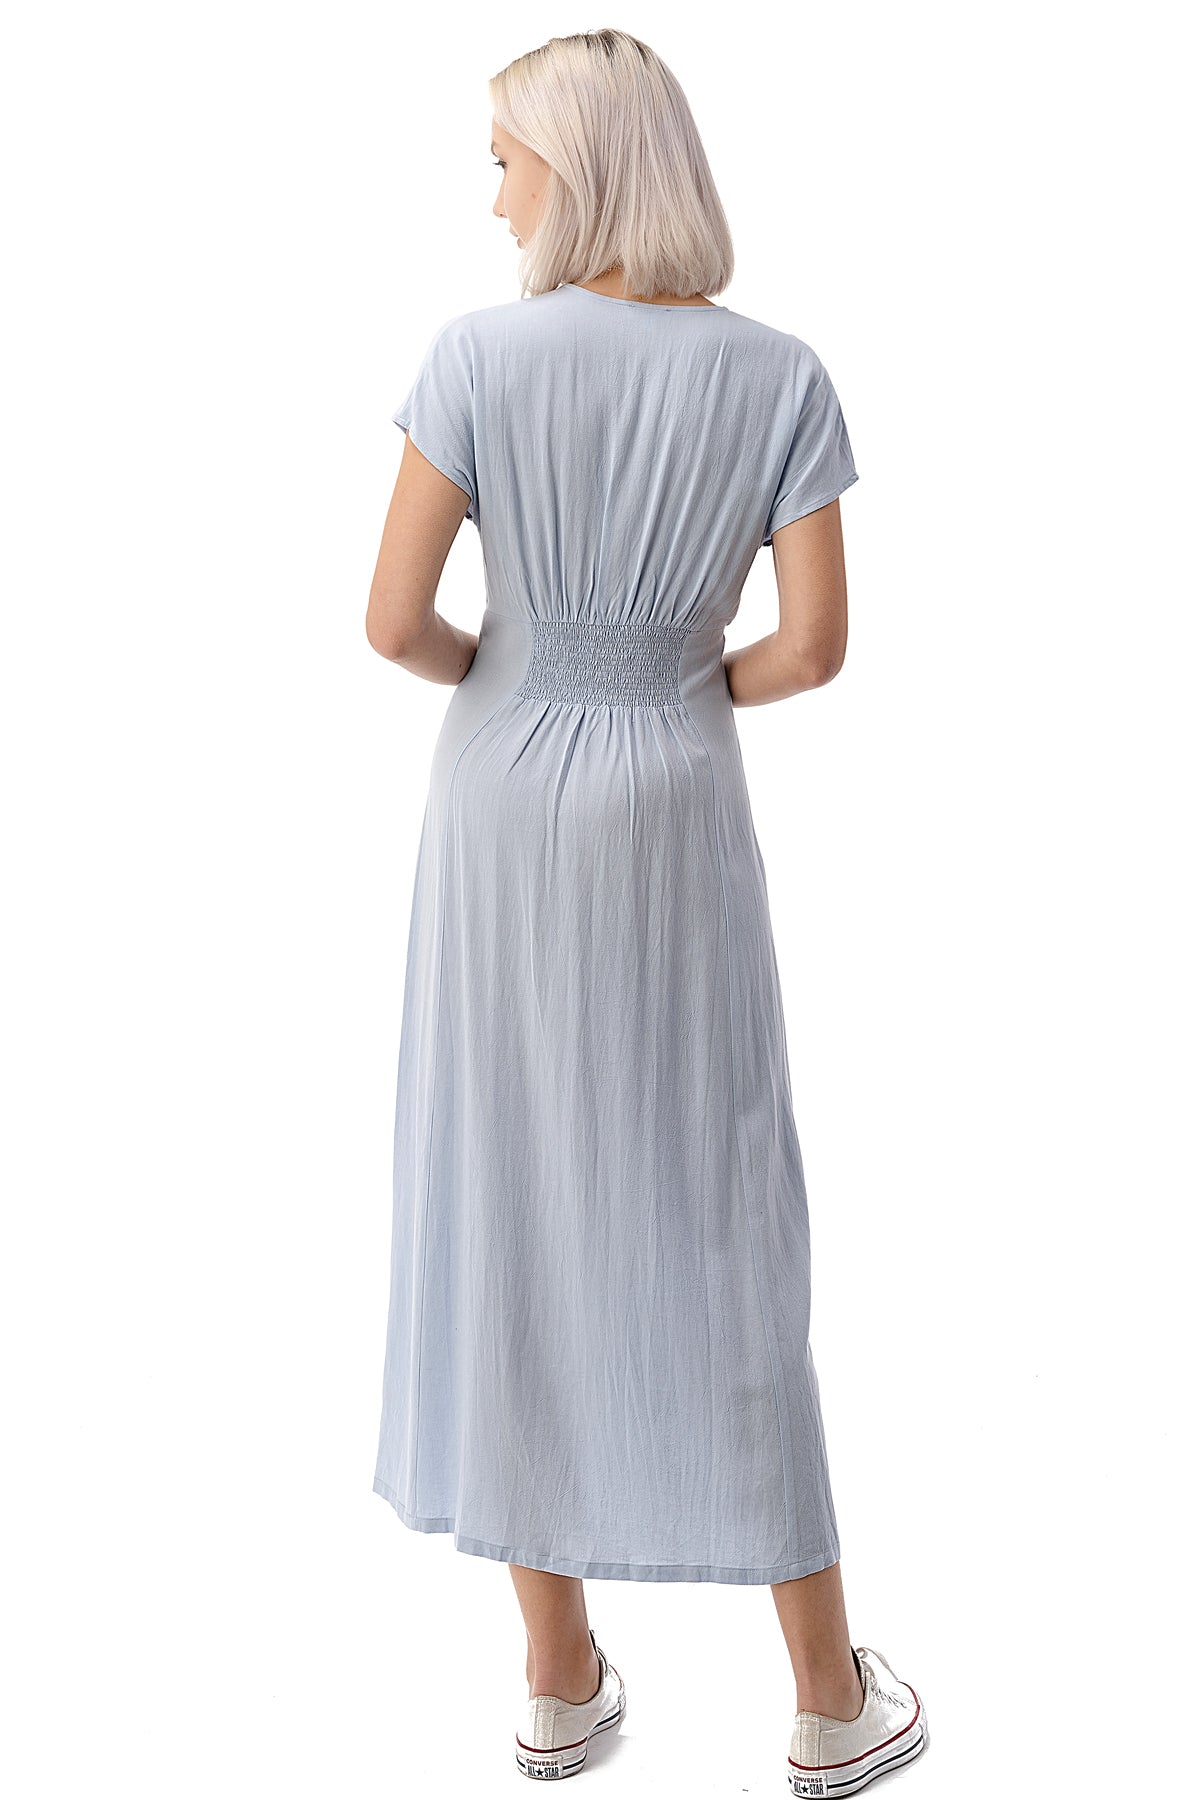 EDGY Land Girl's and Women's Cap Sleeve V-Neck Button Down Self Tie Waist Smocked Flowey Tea-length Dress